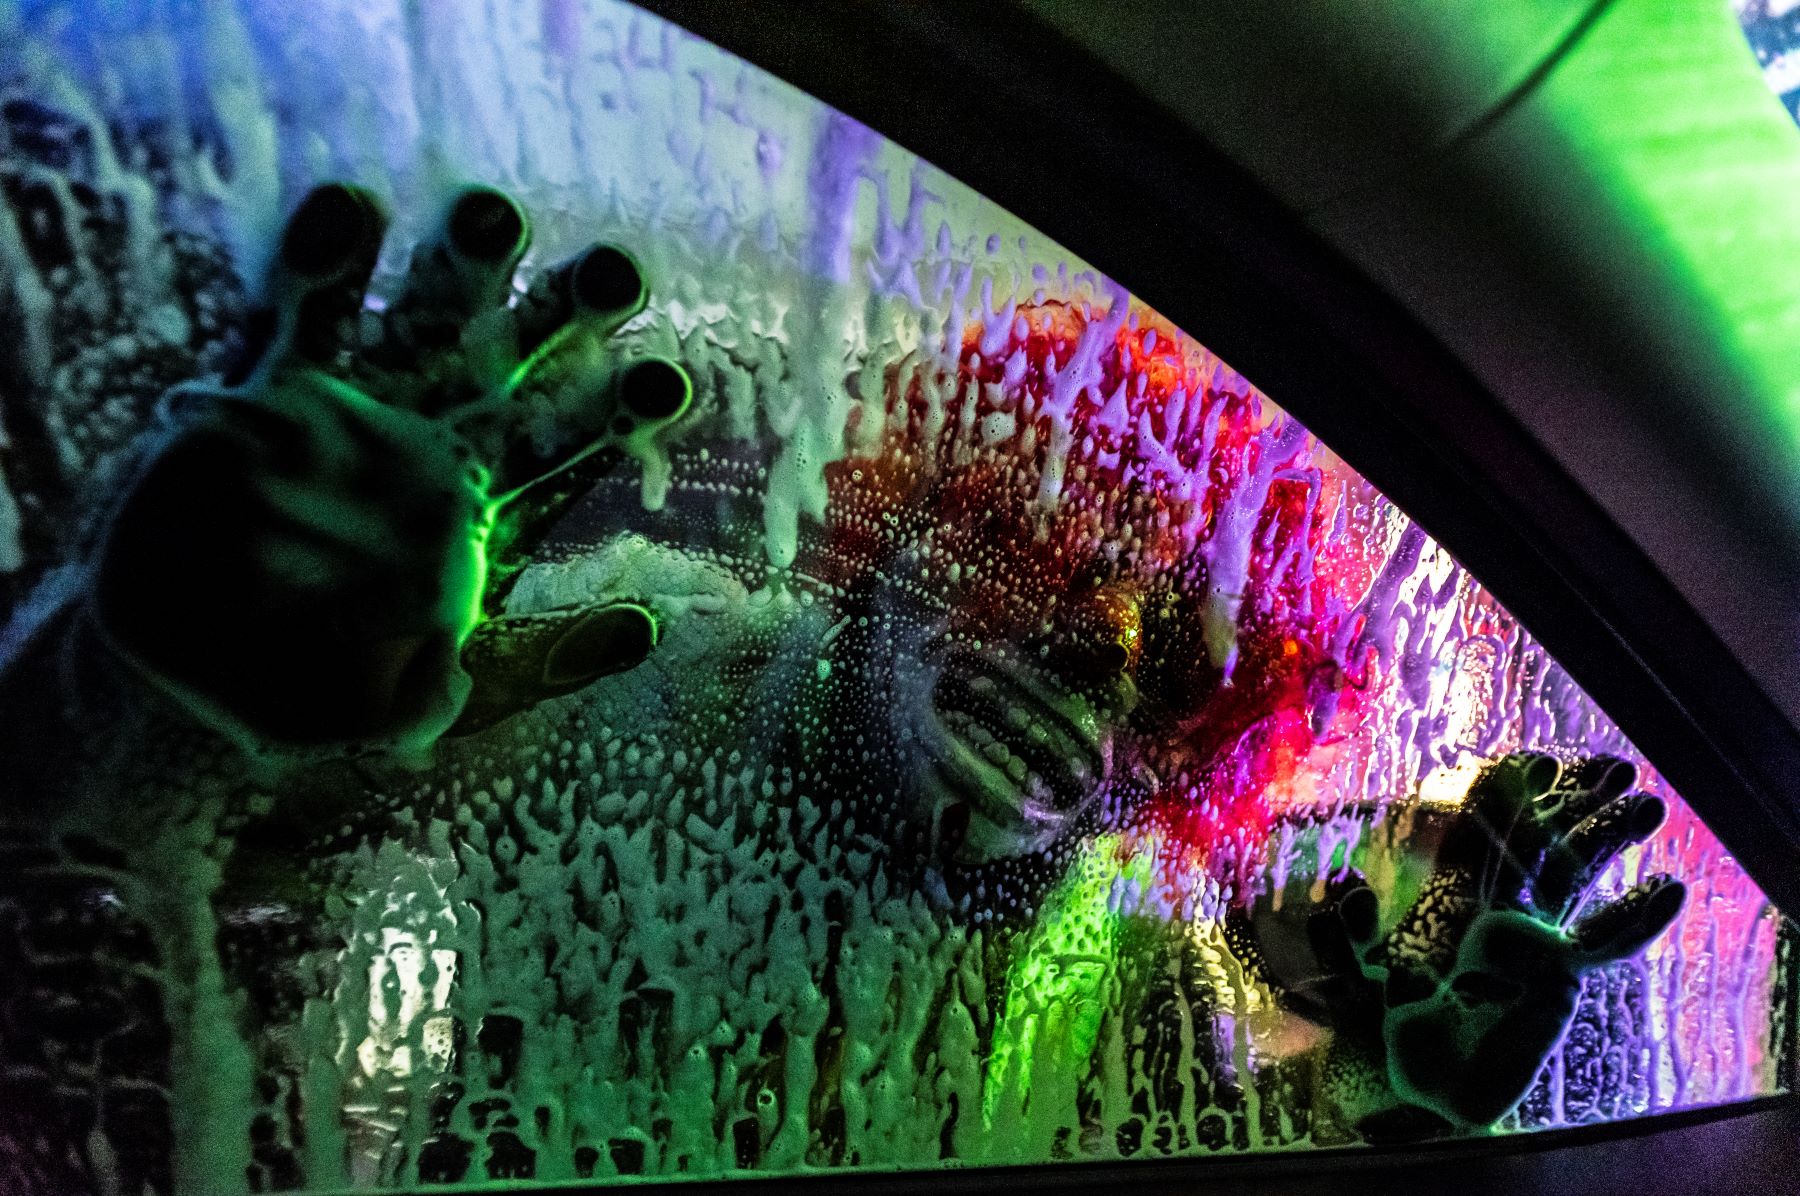 The "Tunnel of Terror" haunted car wash in Huntington Beach, California